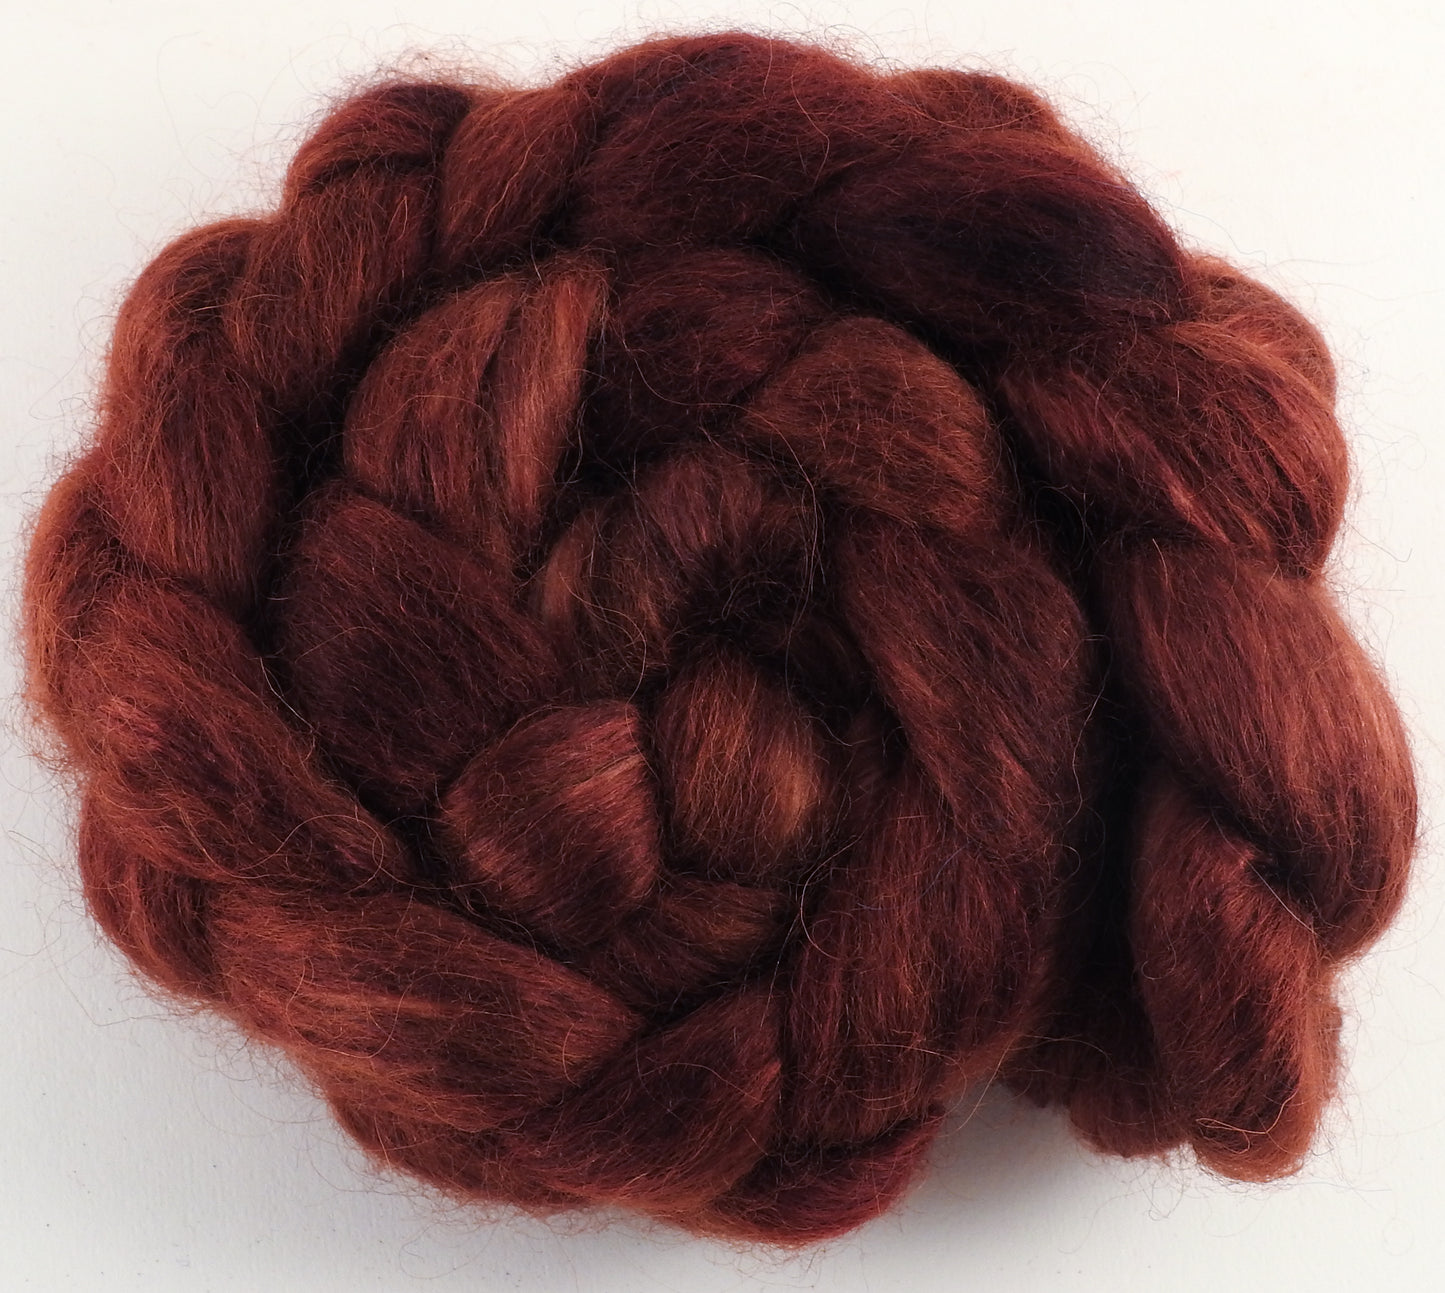 Hand-dyed wensleydale/ mulberry silk roving (65/35) - Petrified Wood - (5.5 oz.) - Inglenook Fibers